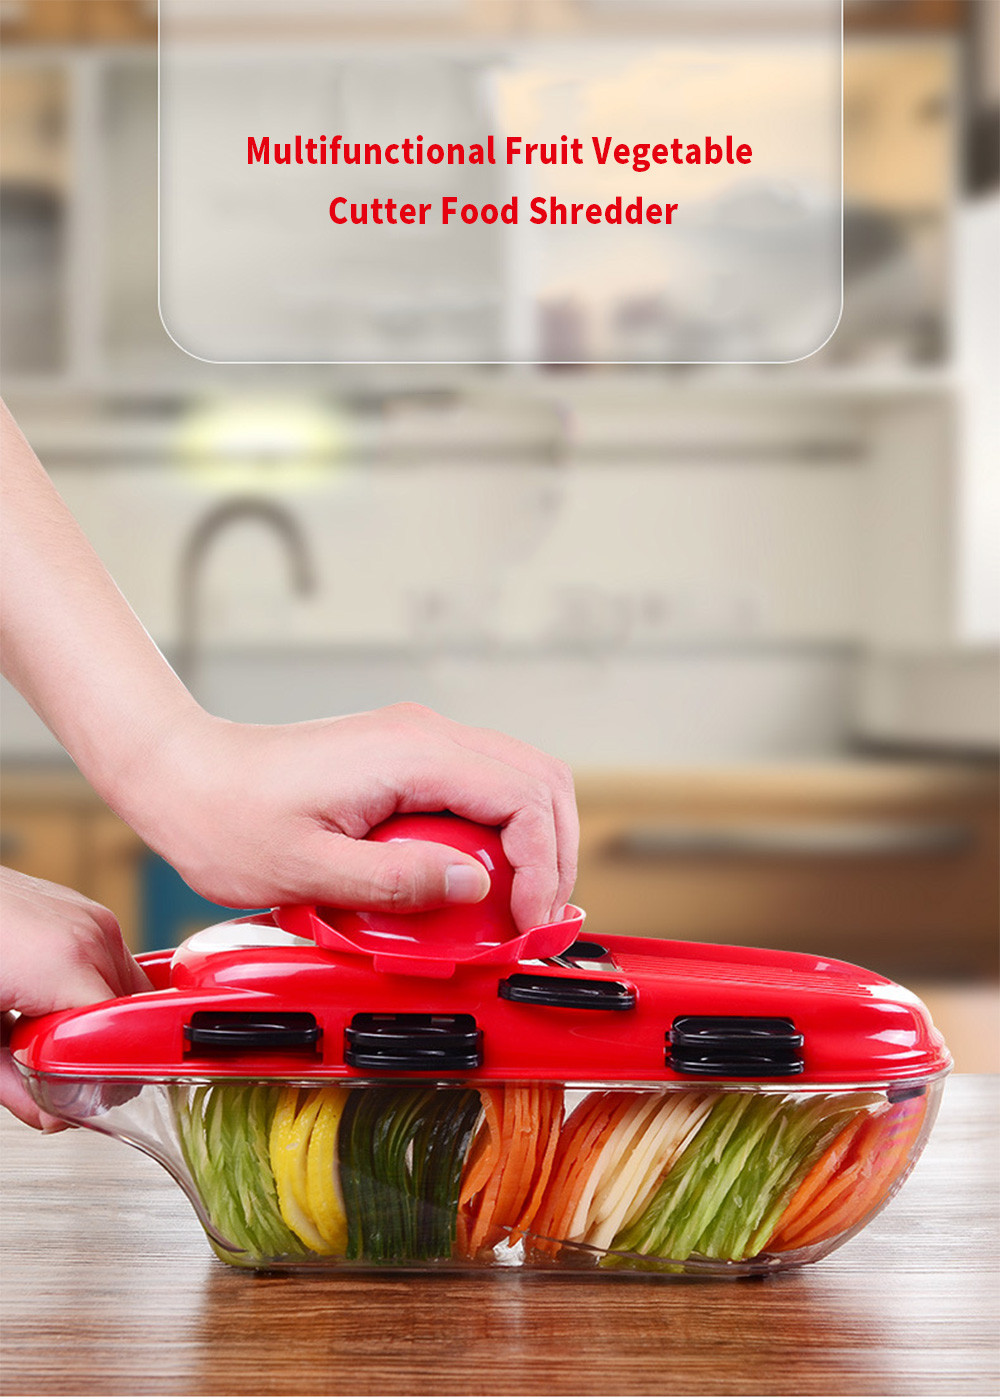 Multifunctional Fruit Vegetable Cutter Food Shredder with 7pcs Blades